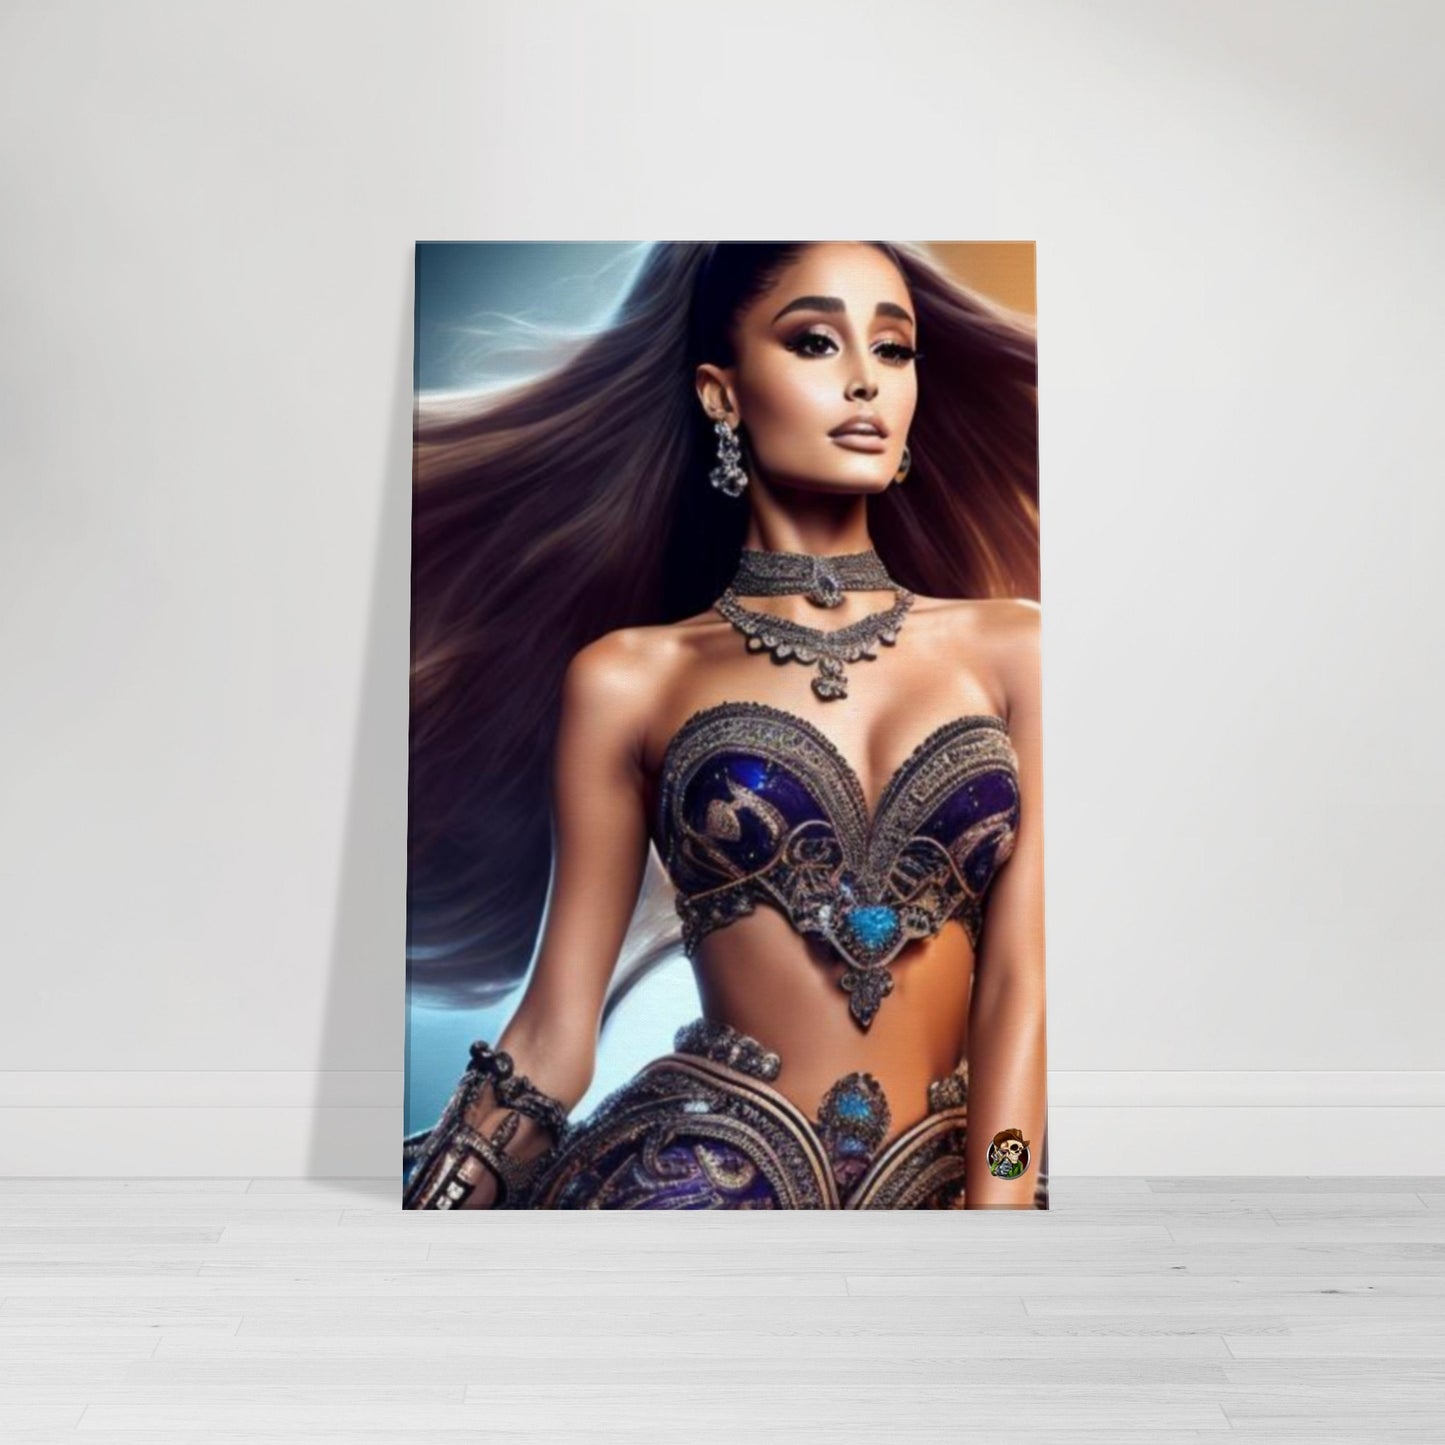 Ariana Grande Canvas created by Ötzi Frosty